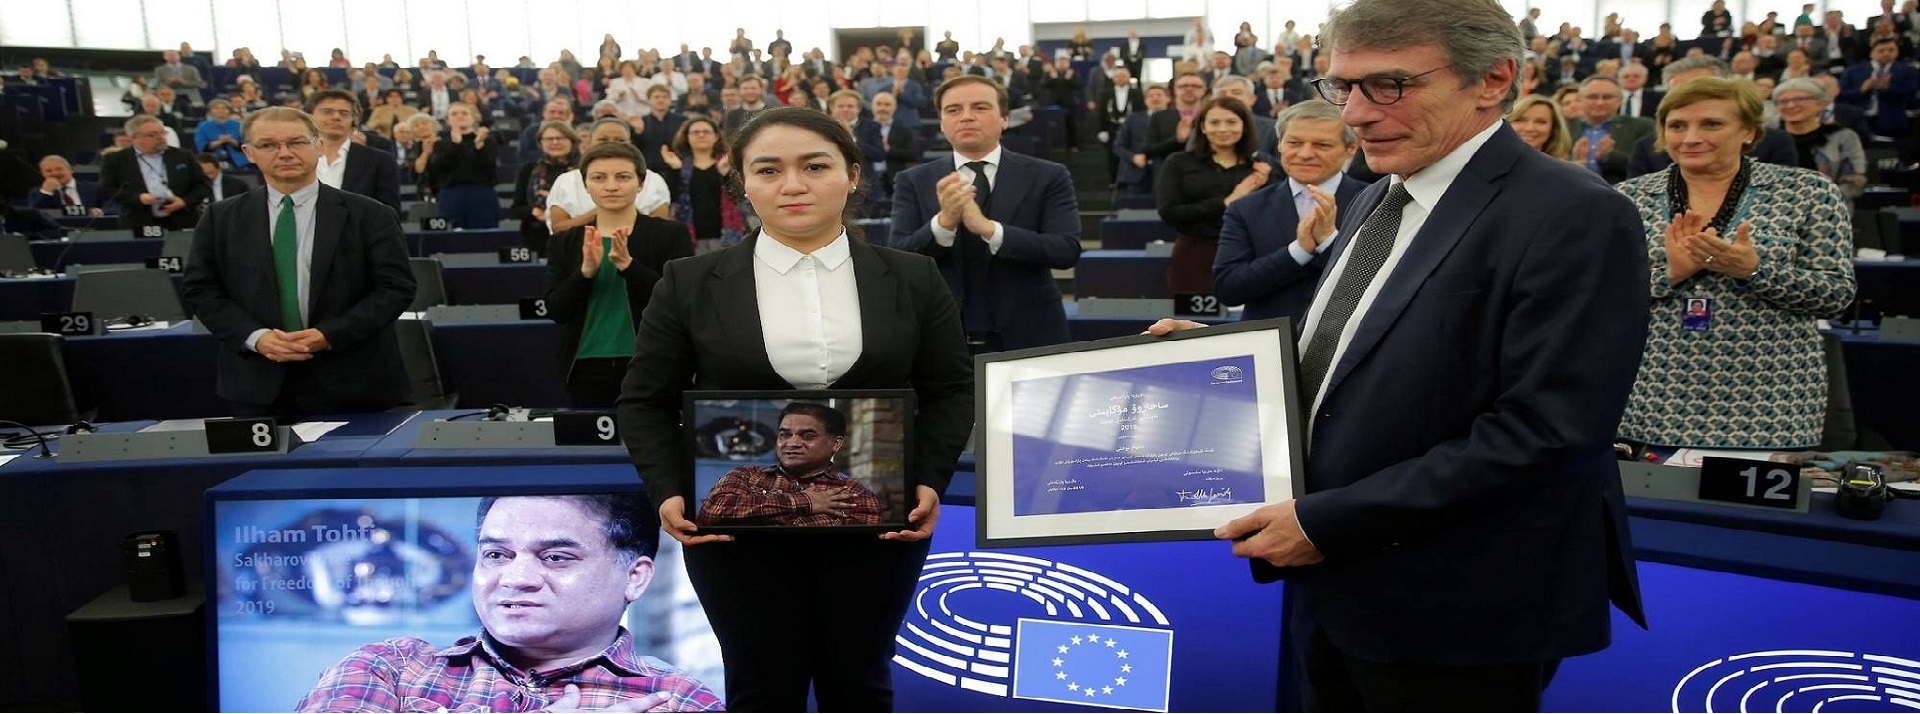 Sakharov Prize: Jailed Uighur academic Ilham Tohti wins award